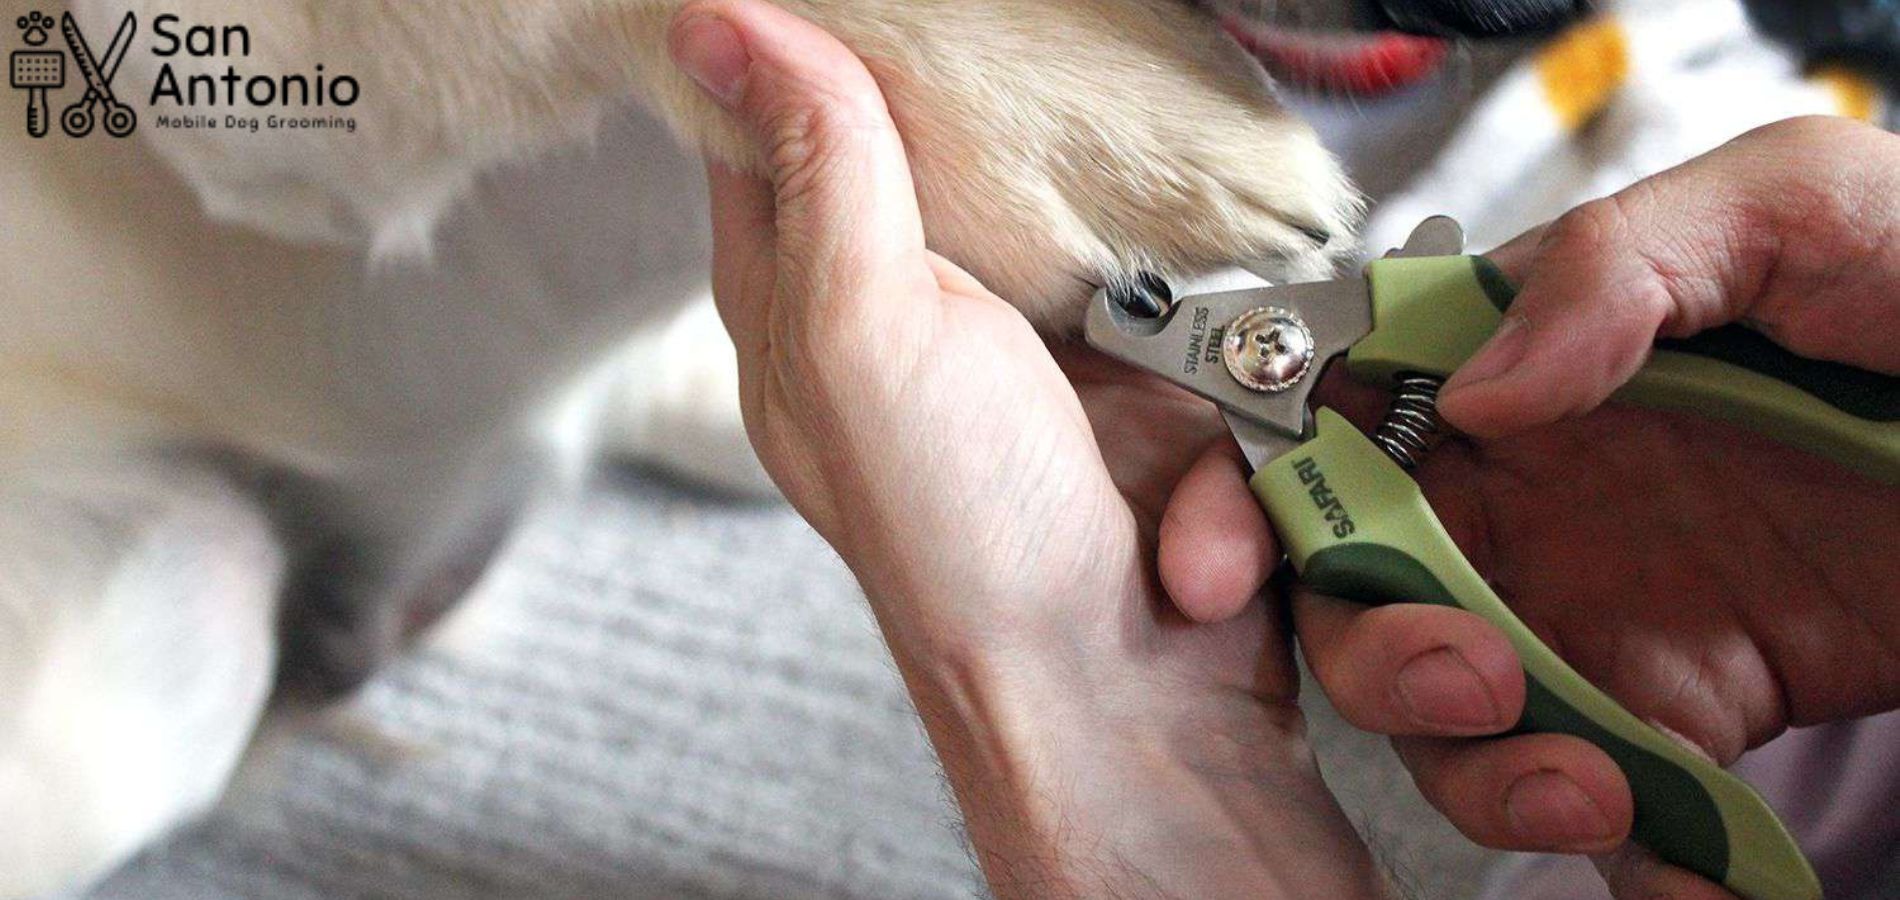 Mobile Dog Nail Trimming San Antonio | Professional Nail Clipping